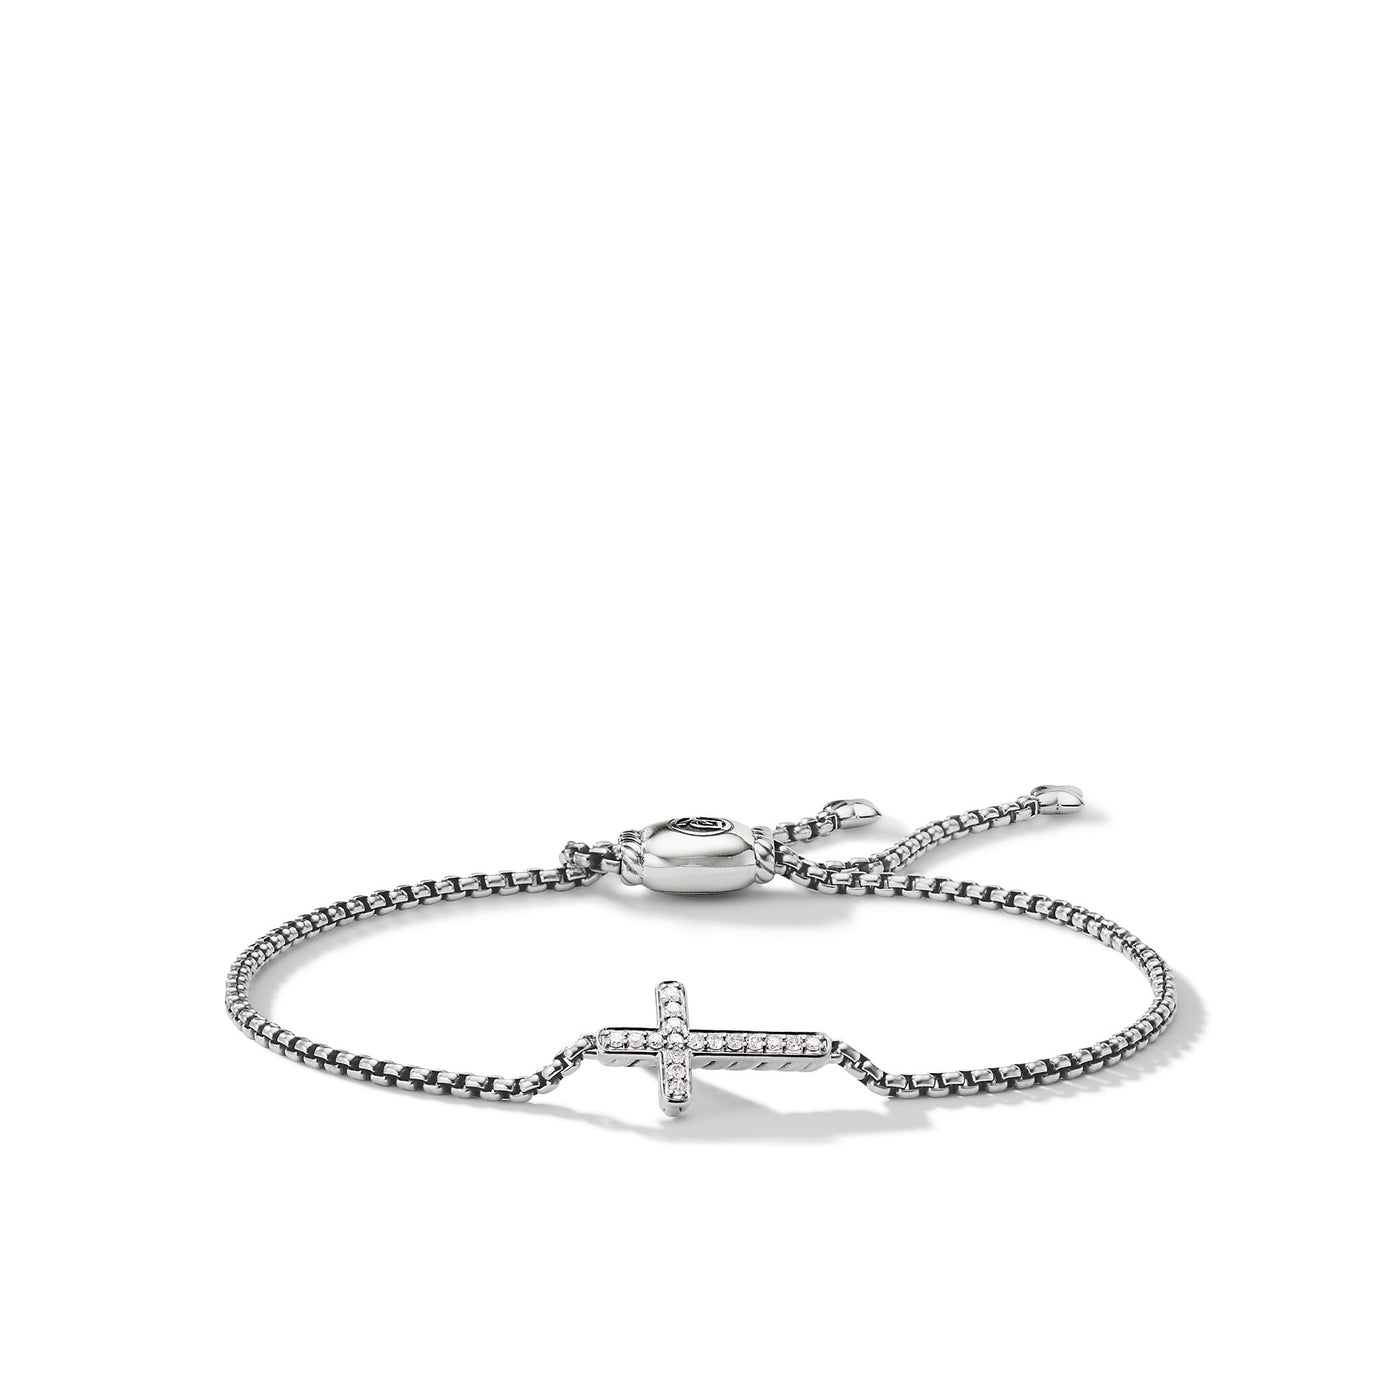 Petite Pavé Cross Chain Bracelet in Sterling Silver with Diamonds\, 1.7mm